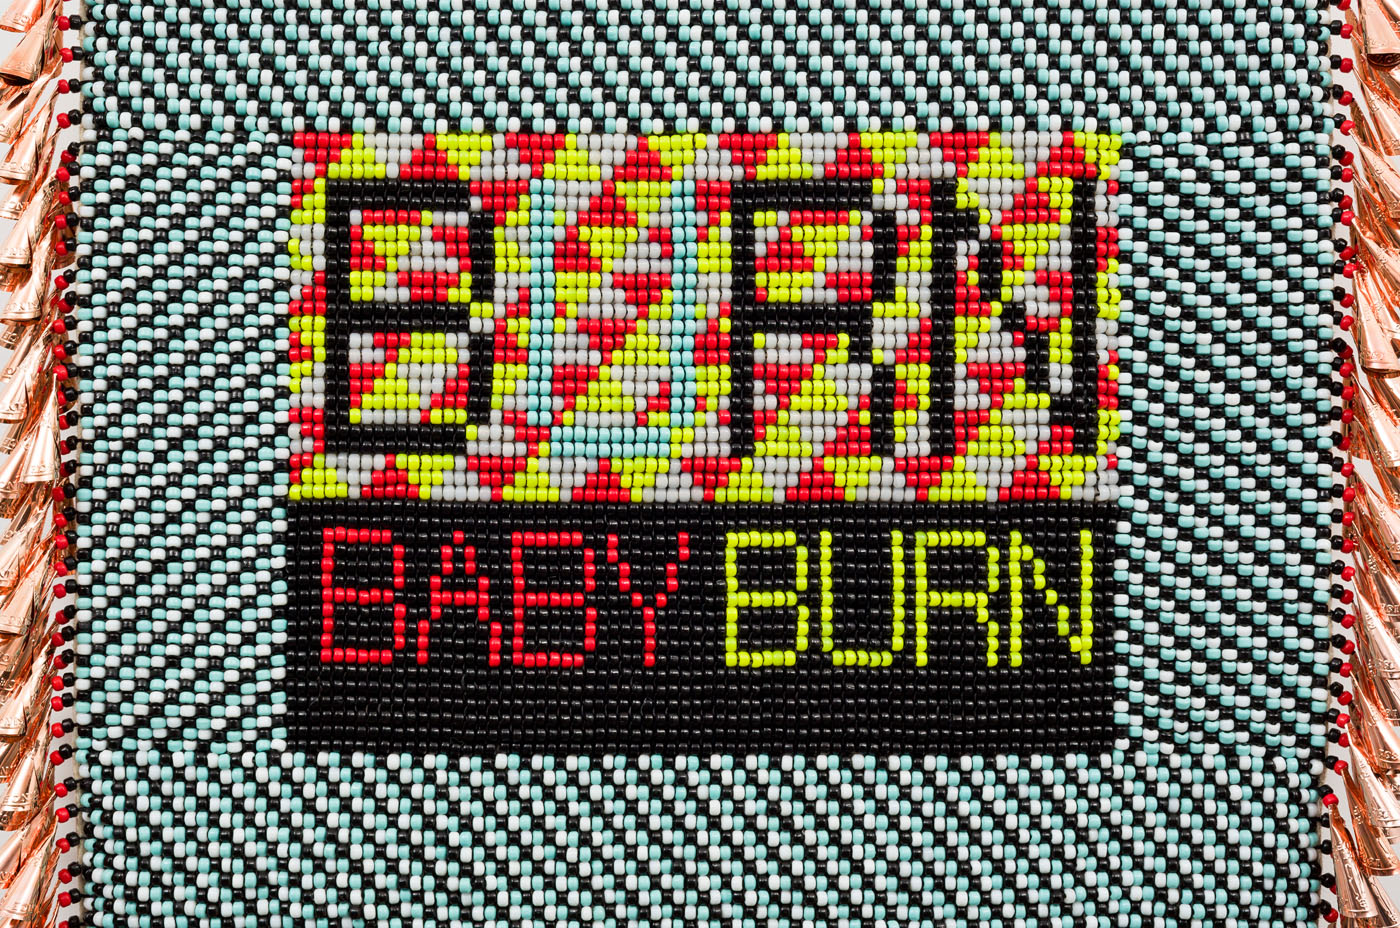  BURN BABY BURN repurposed wool army blanket, canvas, glass beads, plastic beads, copper jingles, nylon fringe, artificial sinew